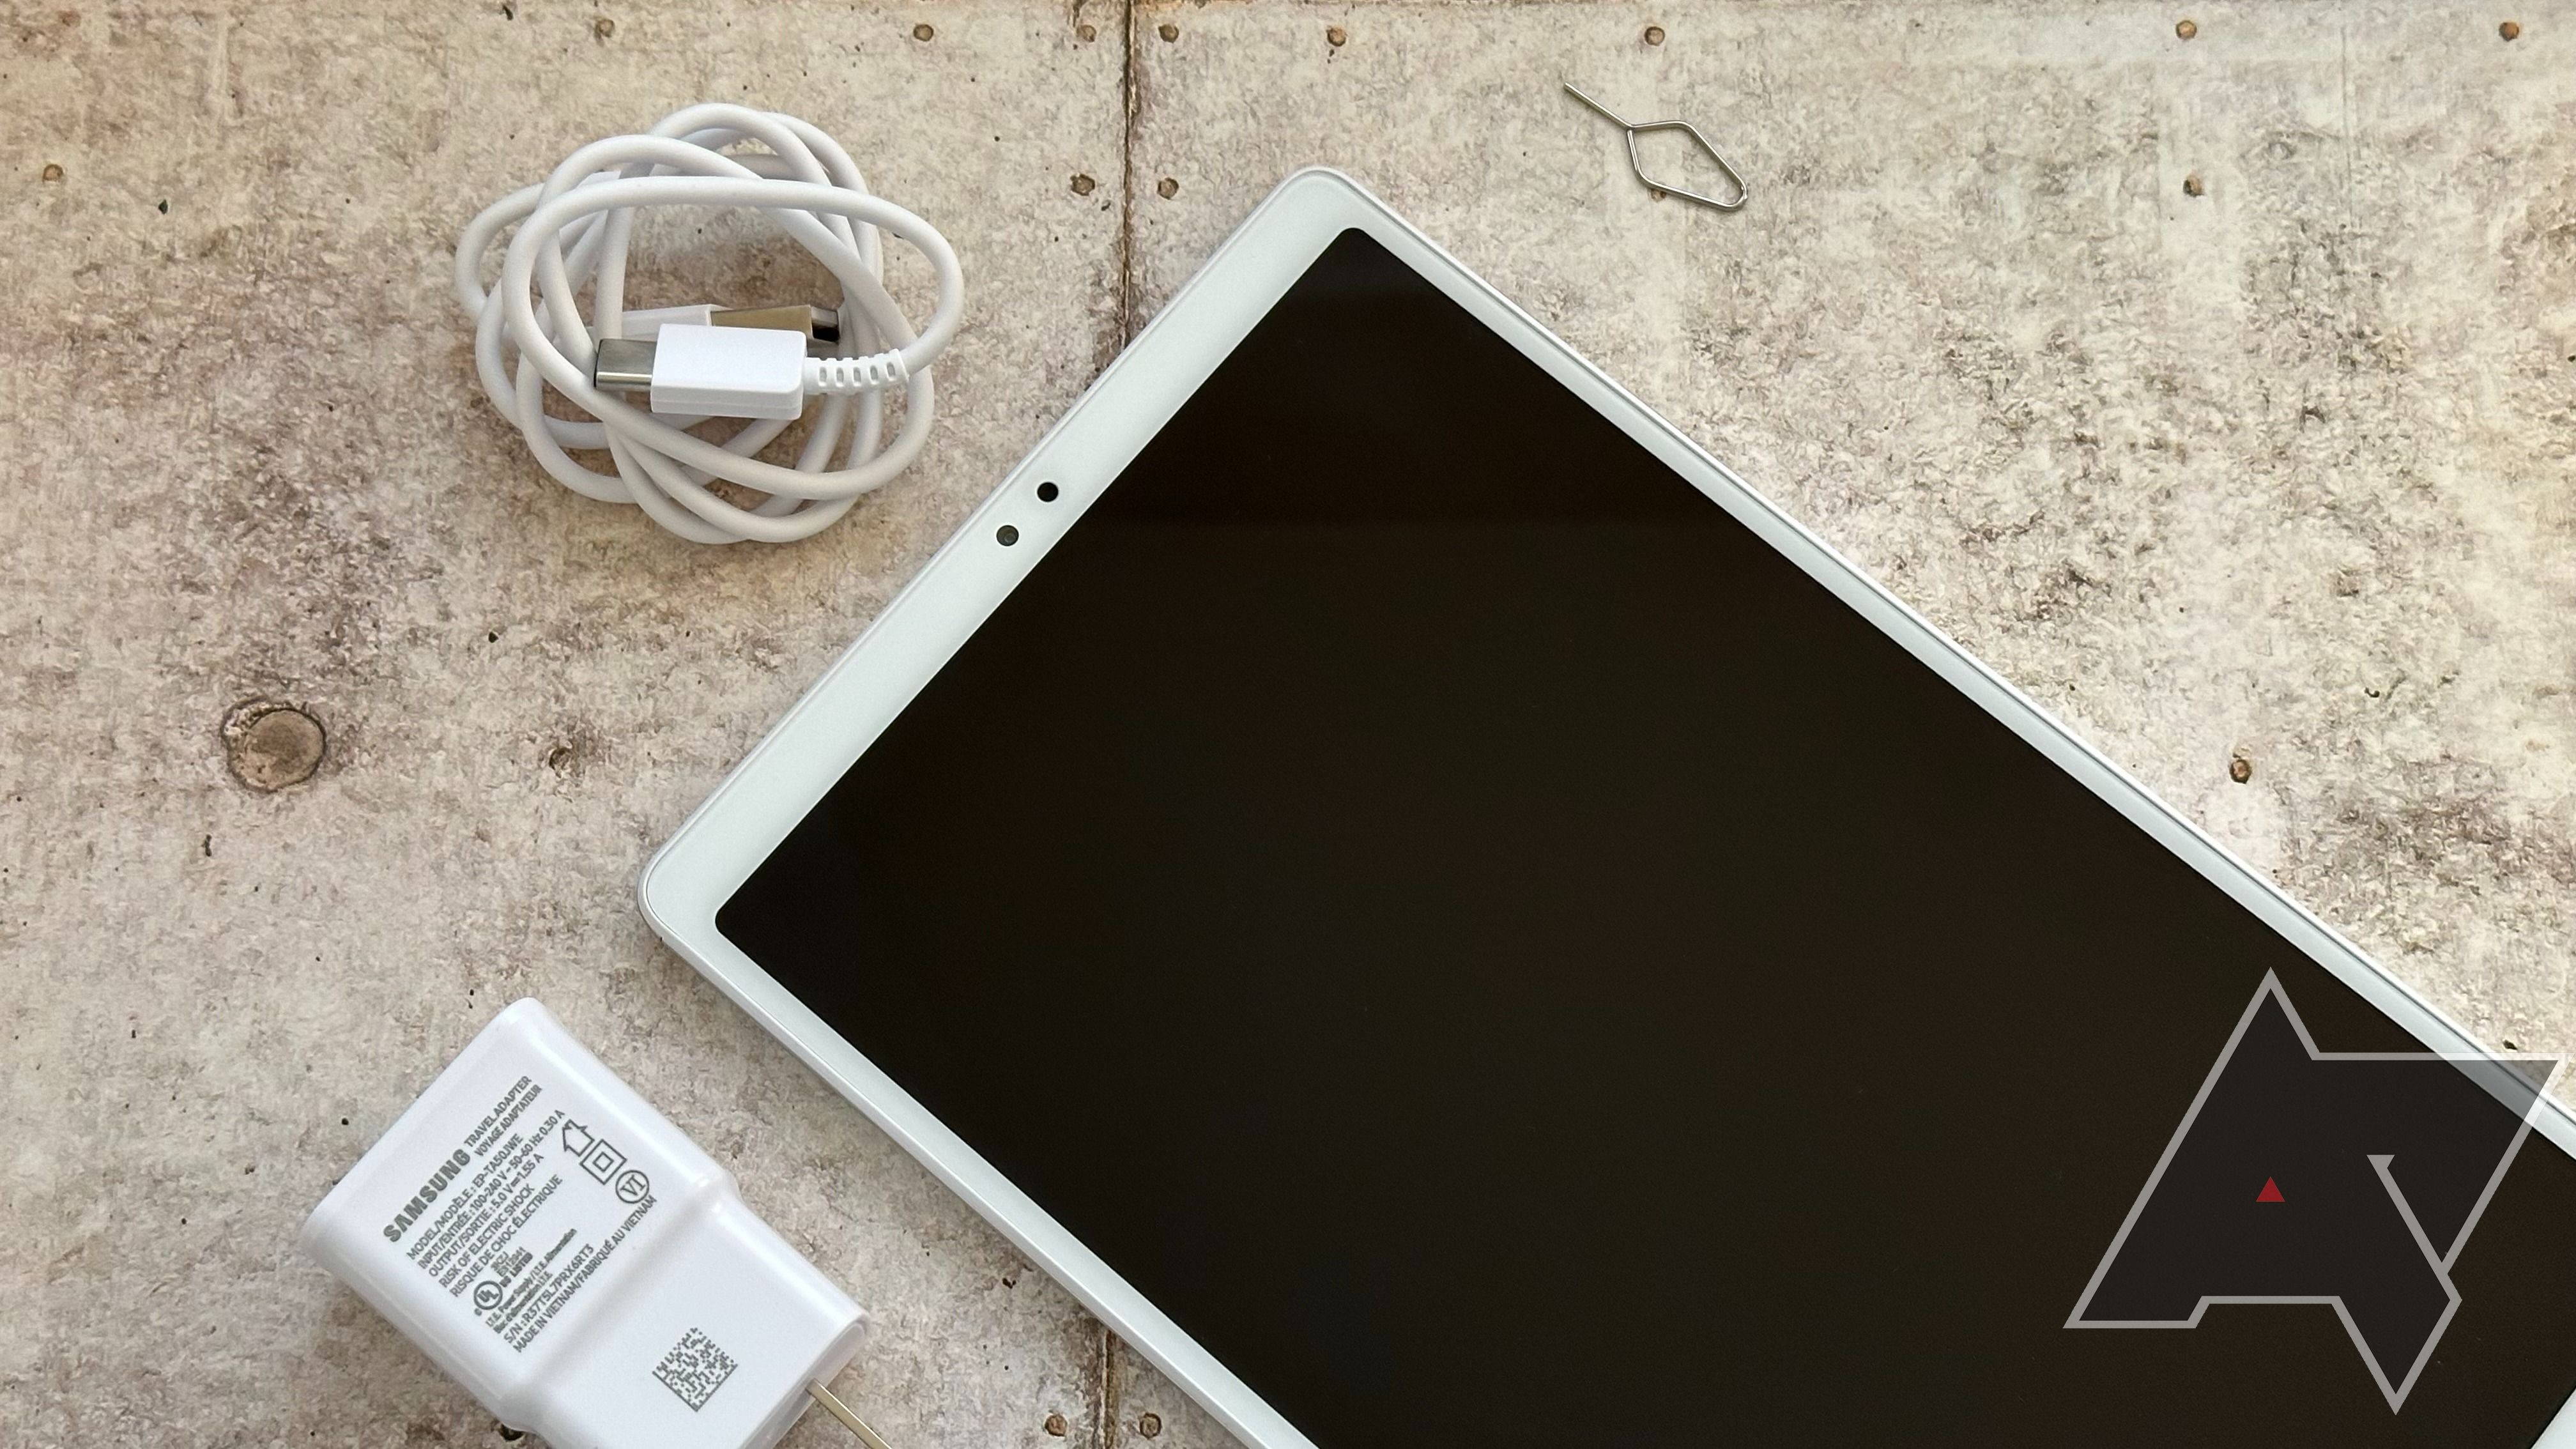 Test Samsung Galaxy Tab A7 Lite - Tablette tactile - UFC-Que Choisir